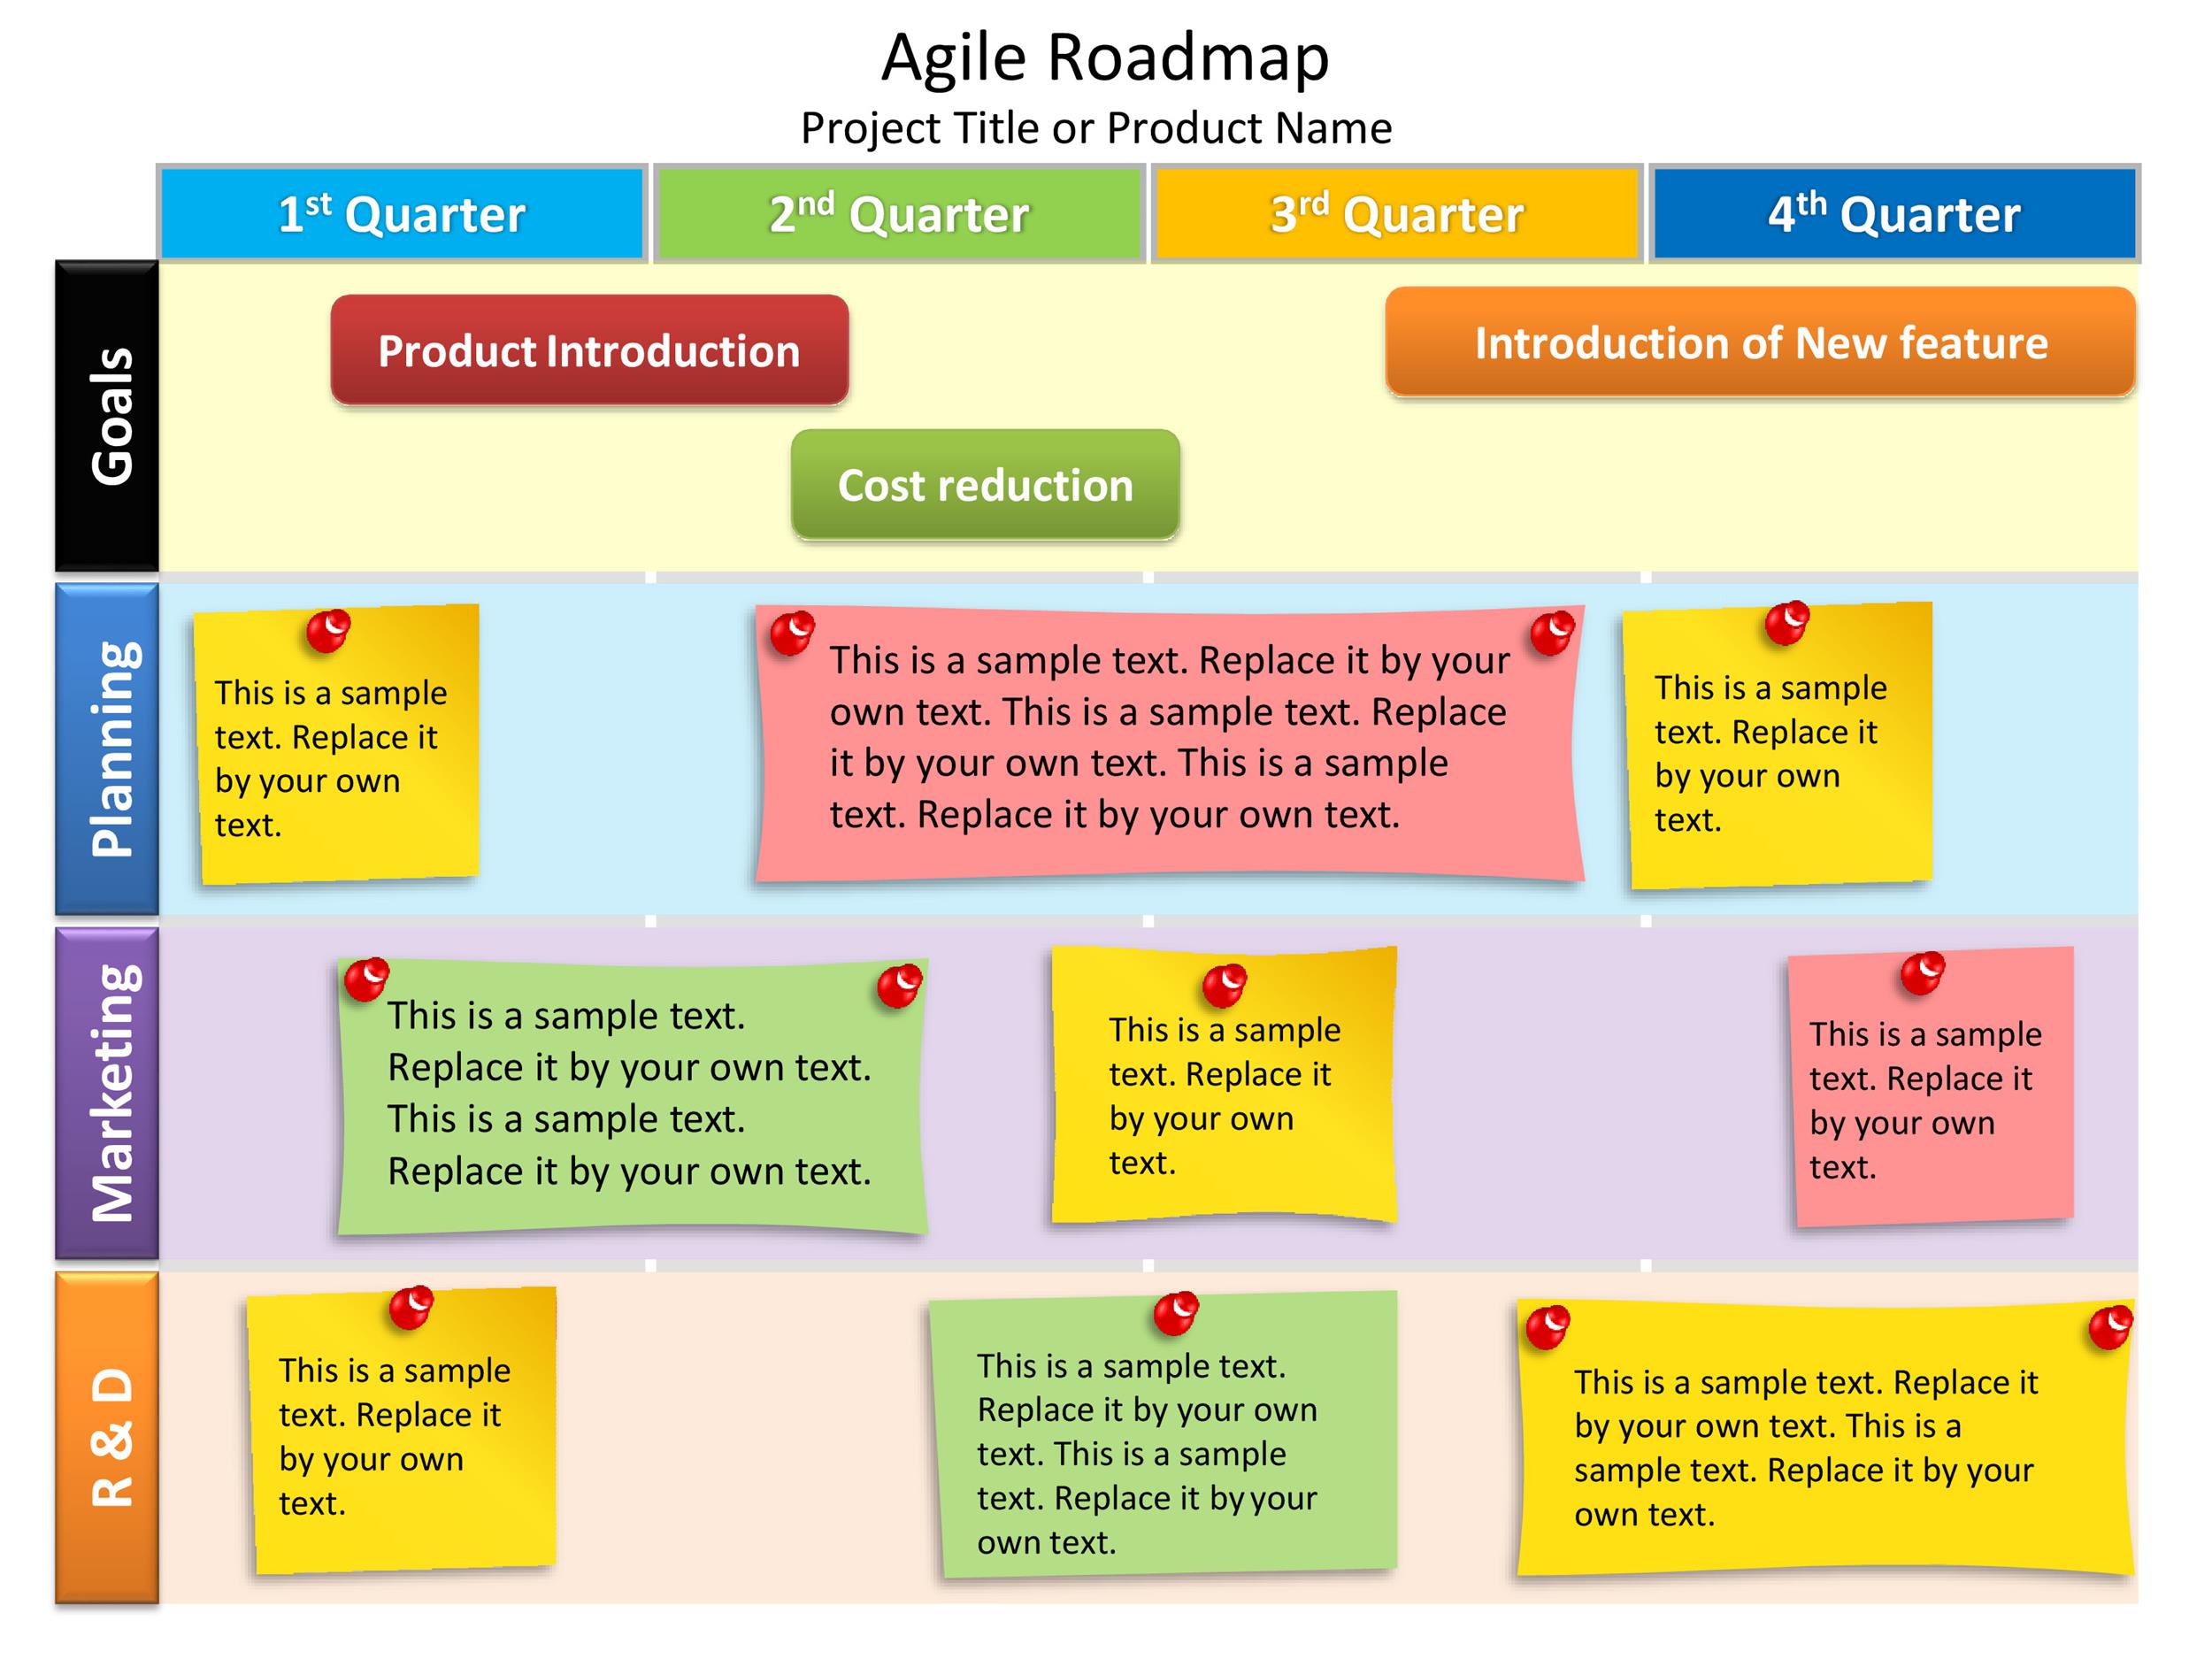 22 Visual Product Roadmap Templates Tools ᐅ TemplateLab